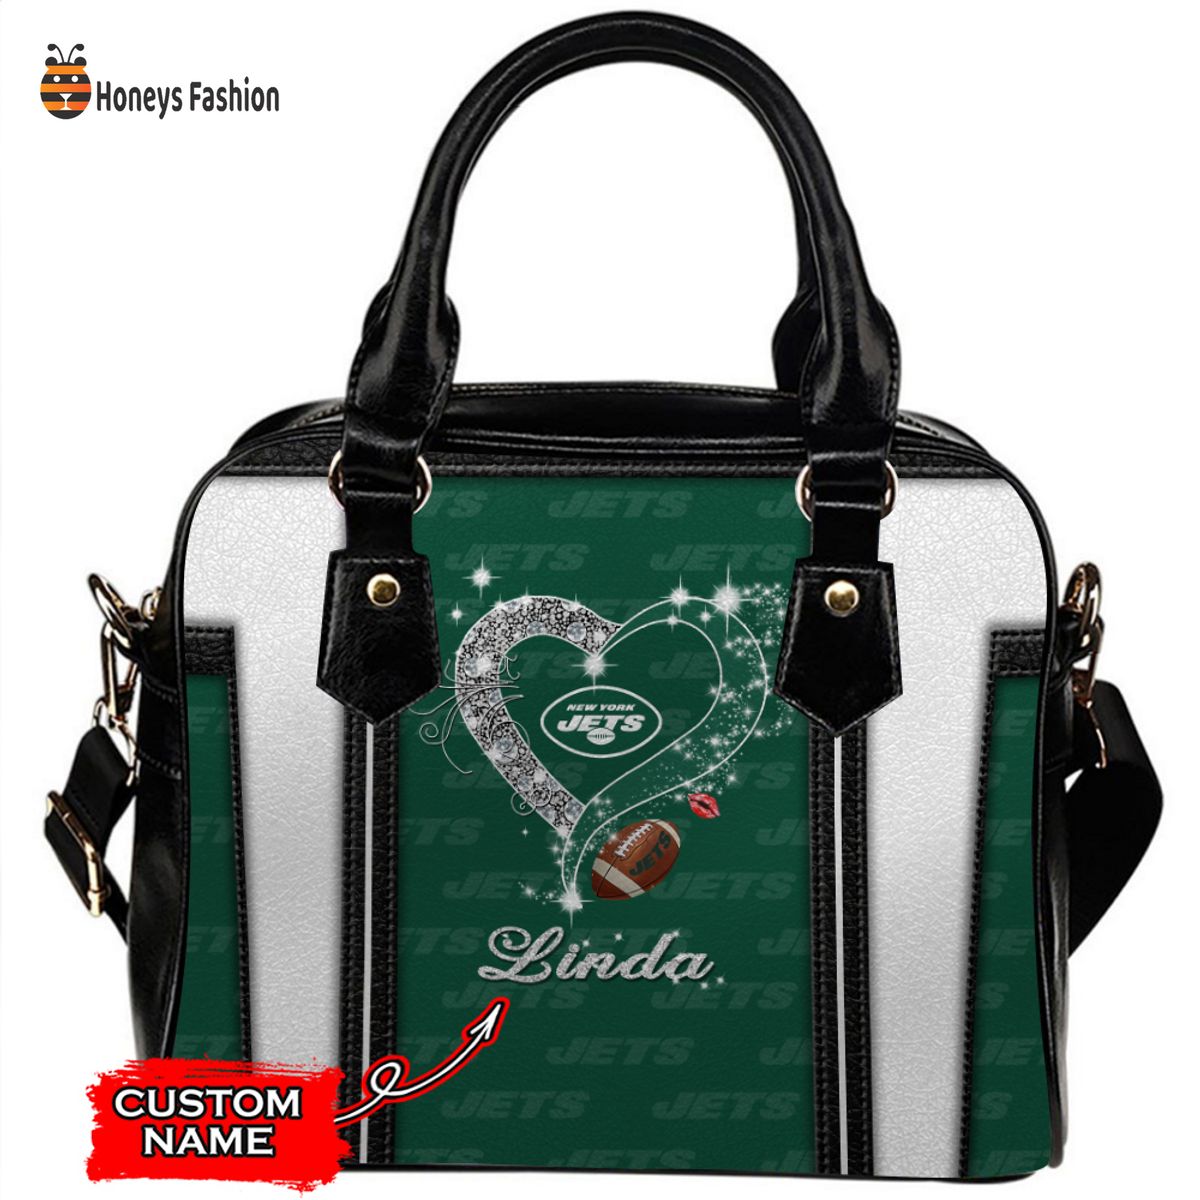 New York Jets NFL Custom Name Leather Handbag Tote bag